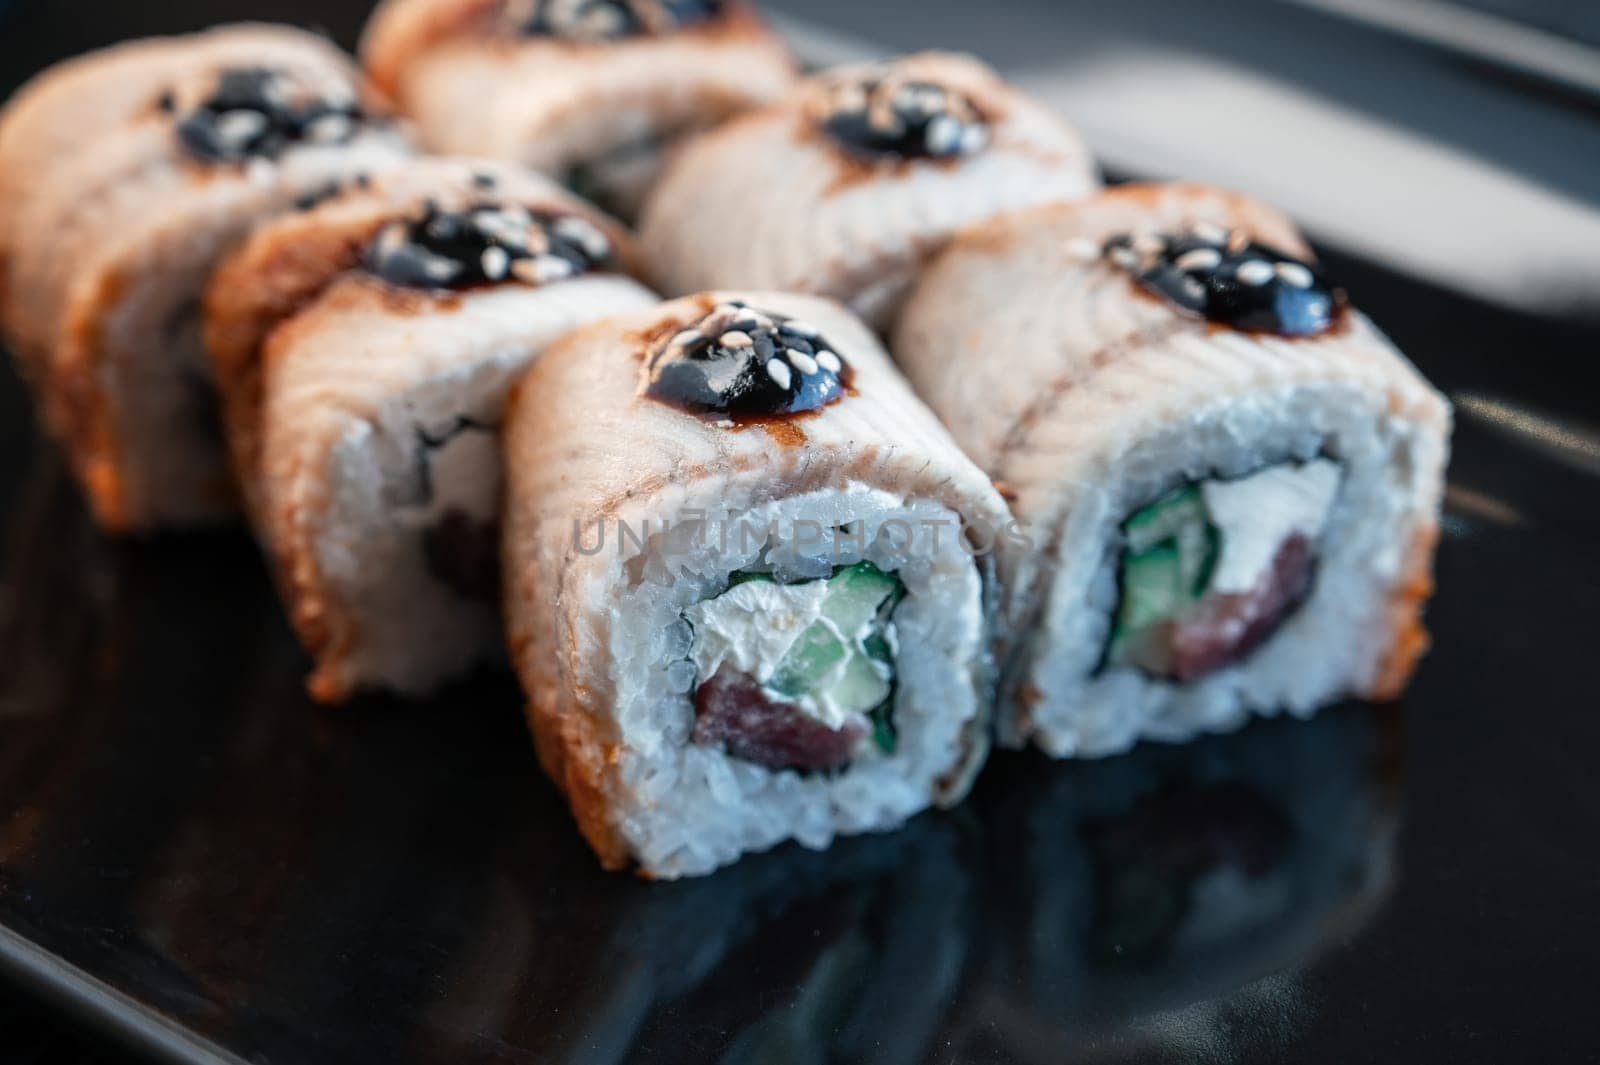 Sushi Rolls California with shrimp eel sesame. Food delivery. 4K Close-up